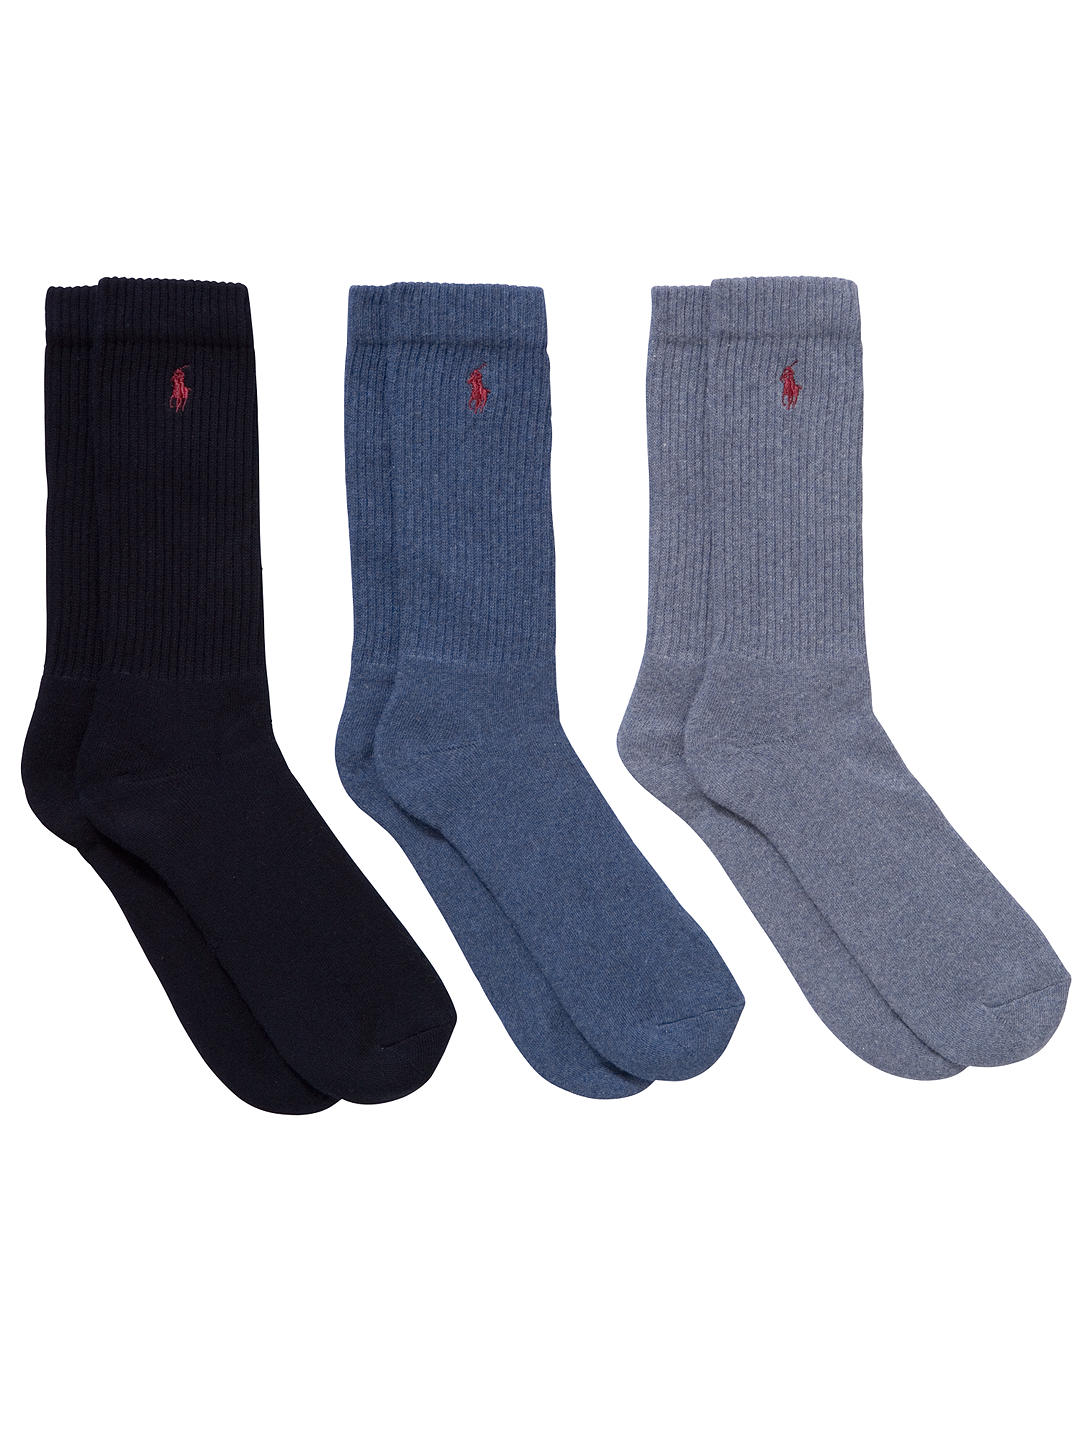 Polo Ralph Lauren Classic Crew Socks, Pack of 3, One Size, Multi